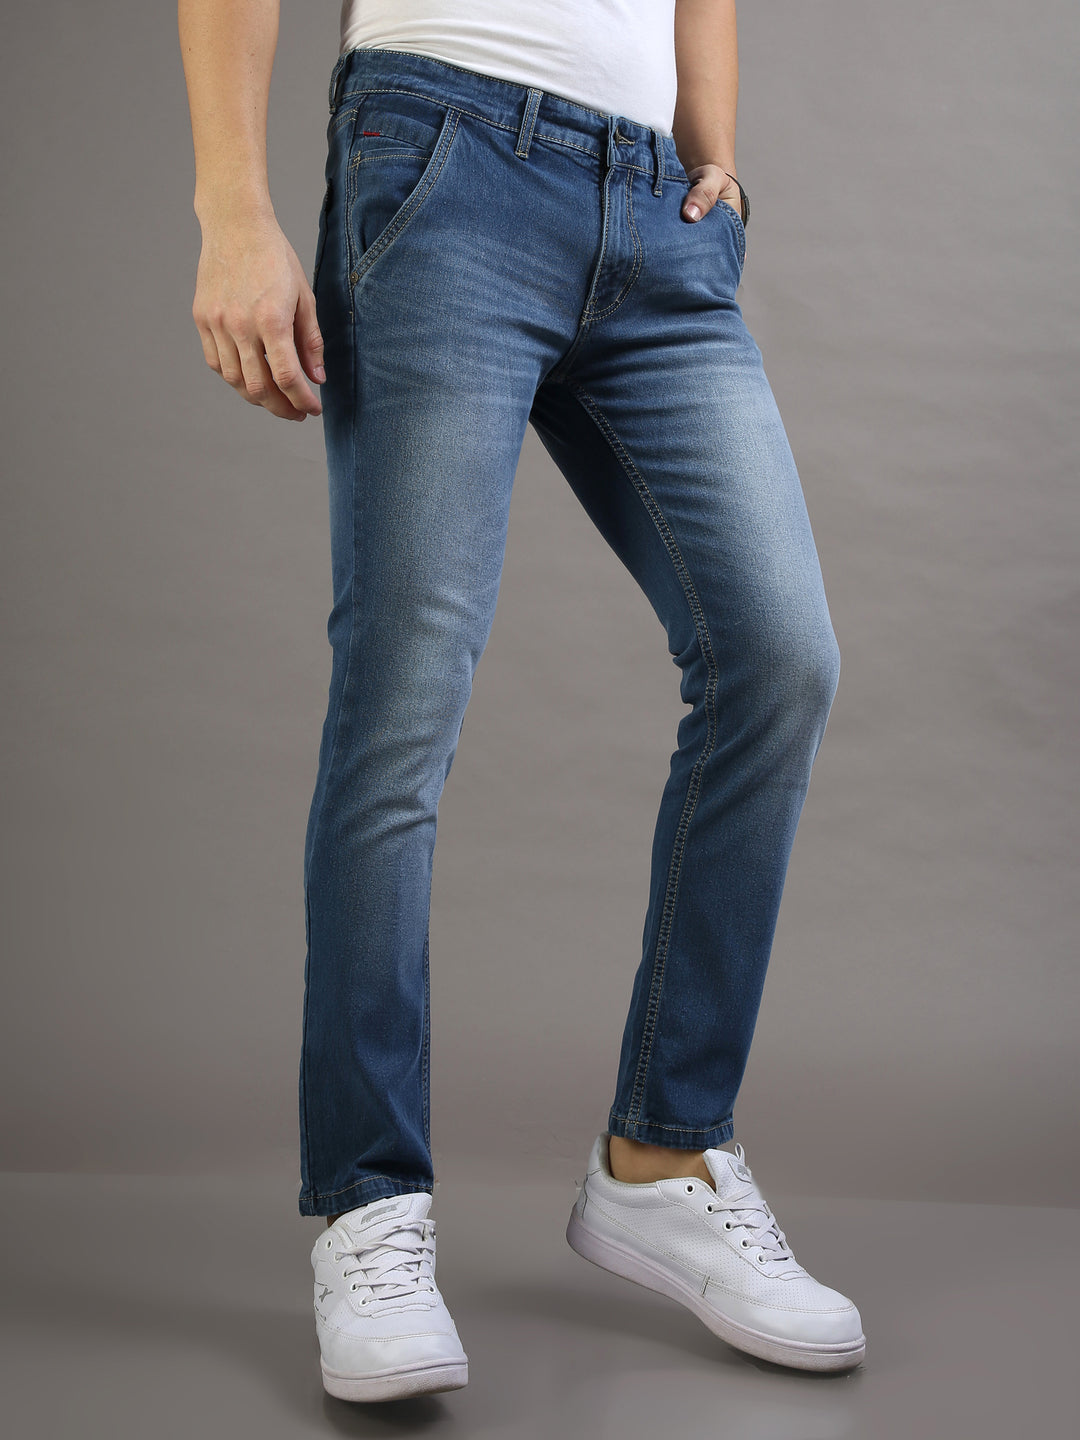 Classic Slim Navy jeans